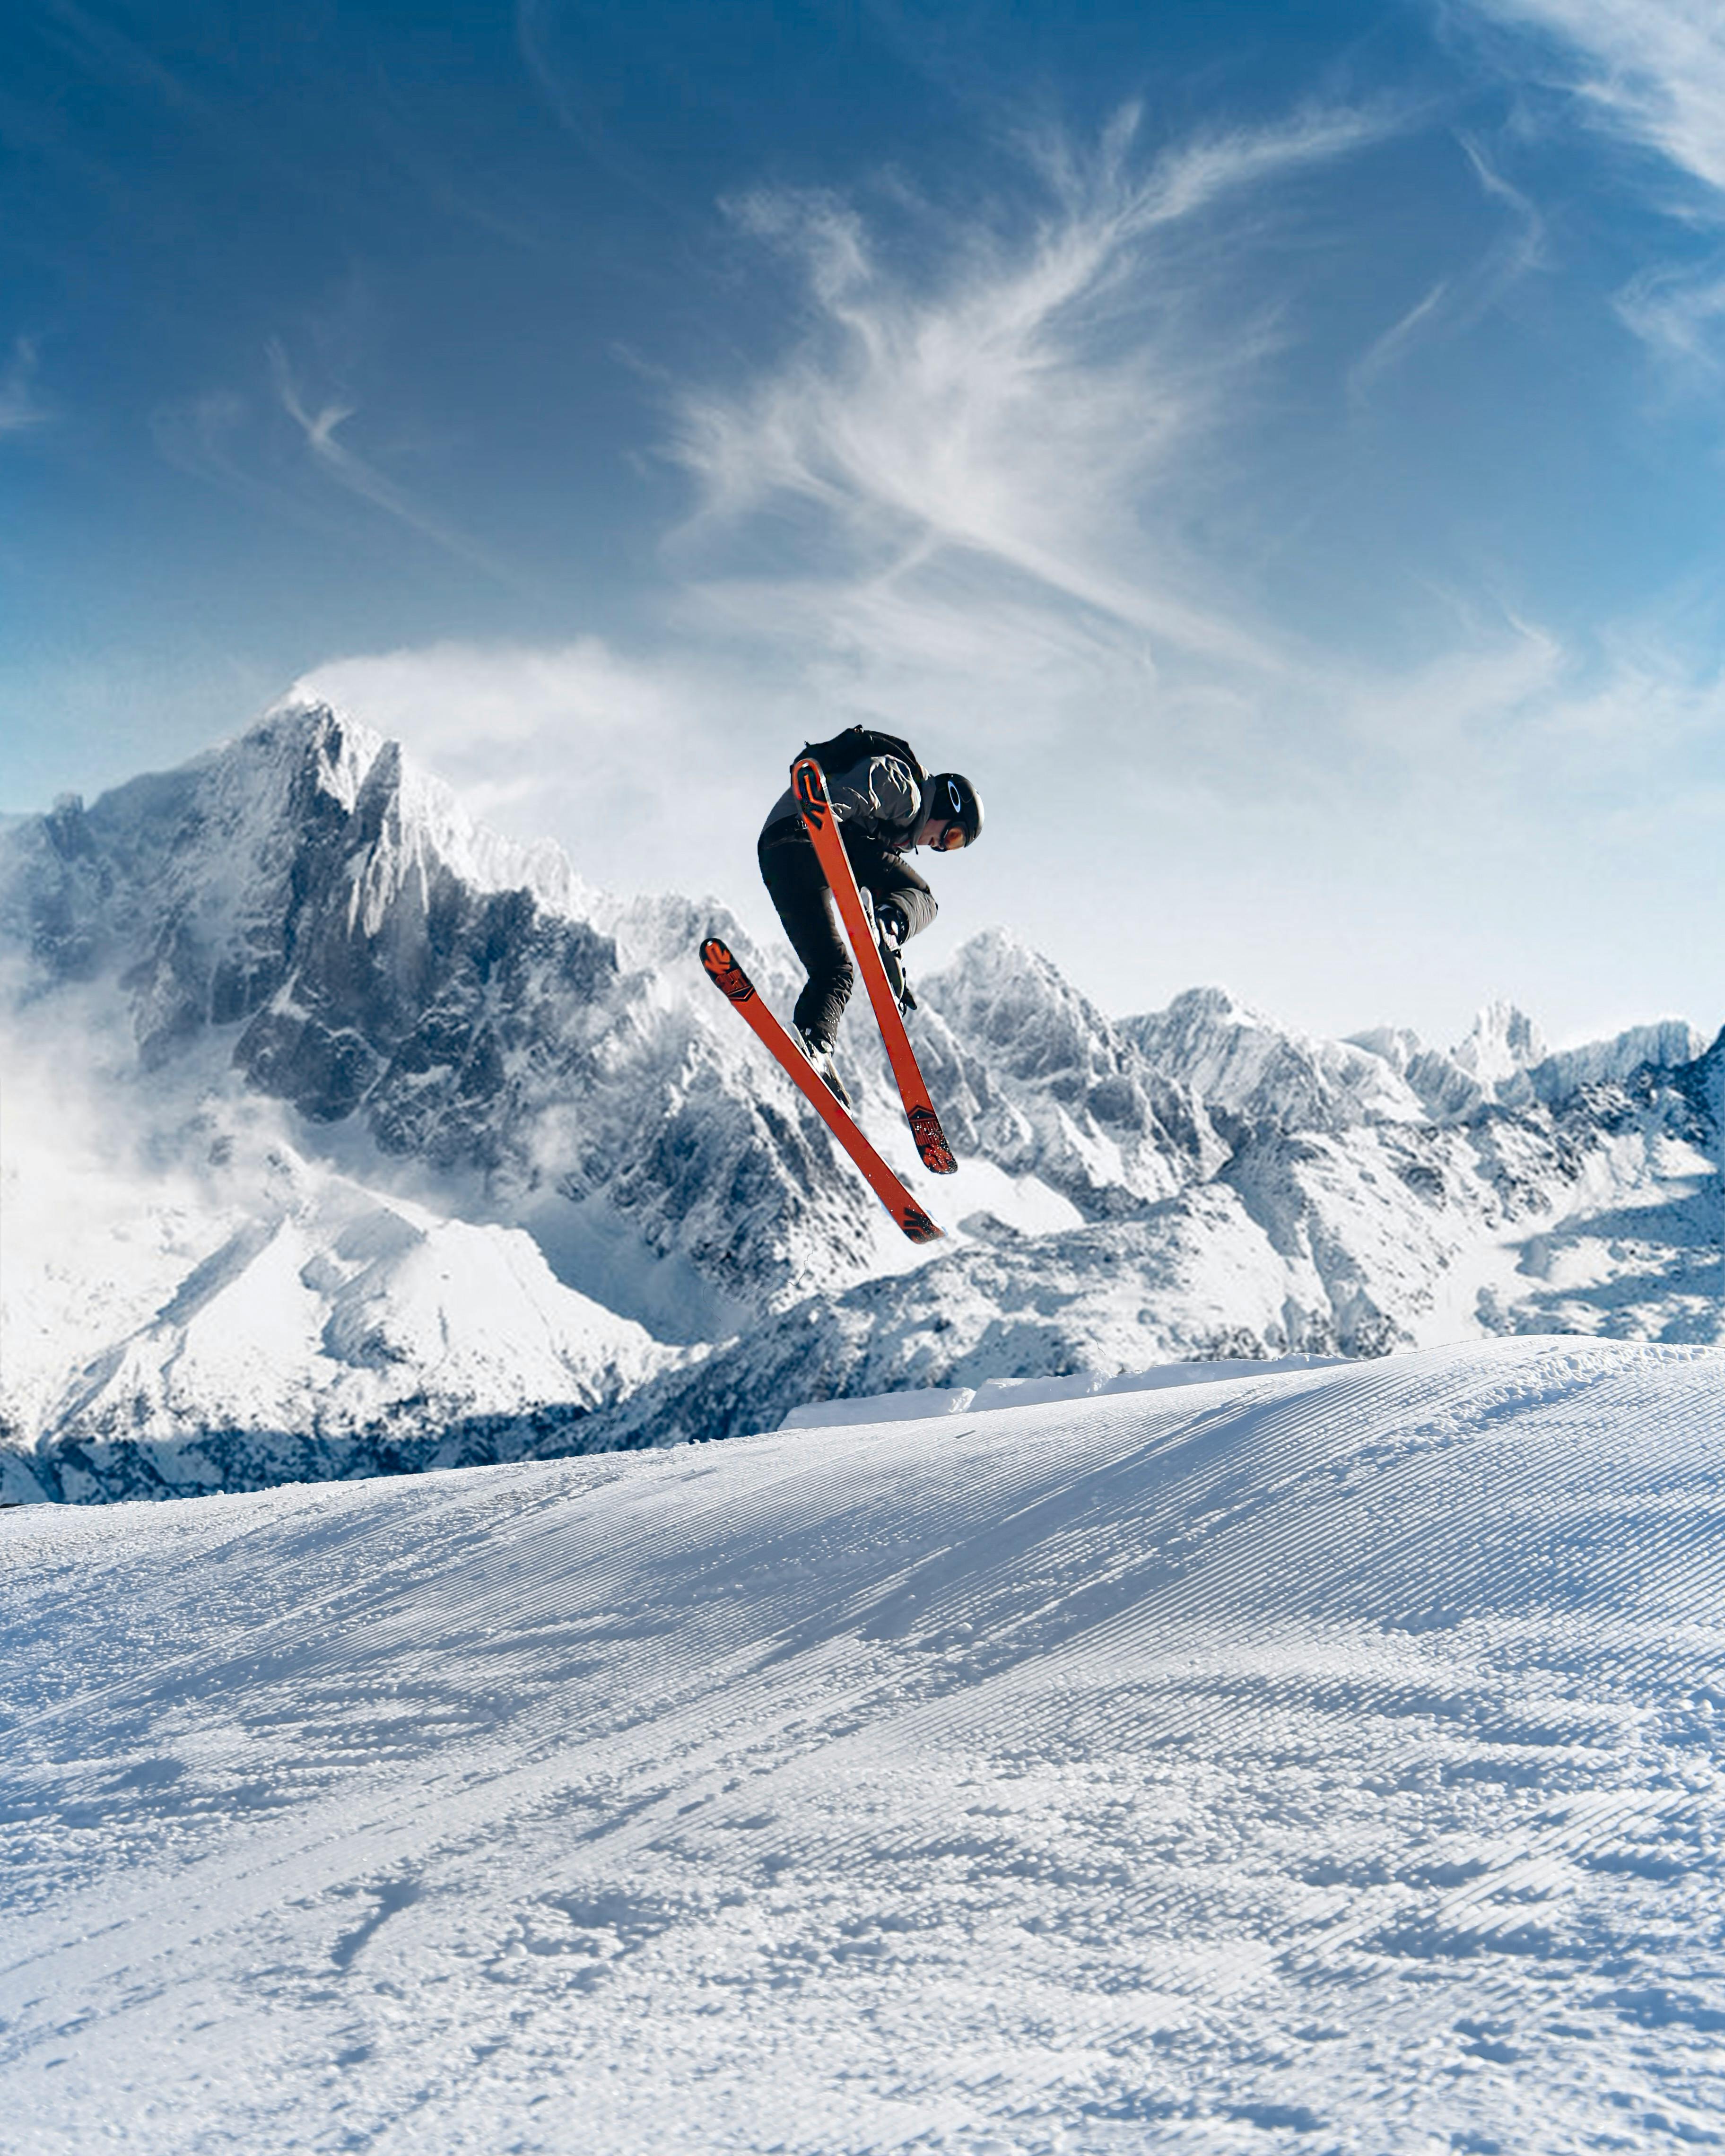 Download mobile wallpaper Snow Sports free 15326  Snow skiing Best  ski resorts Skiing